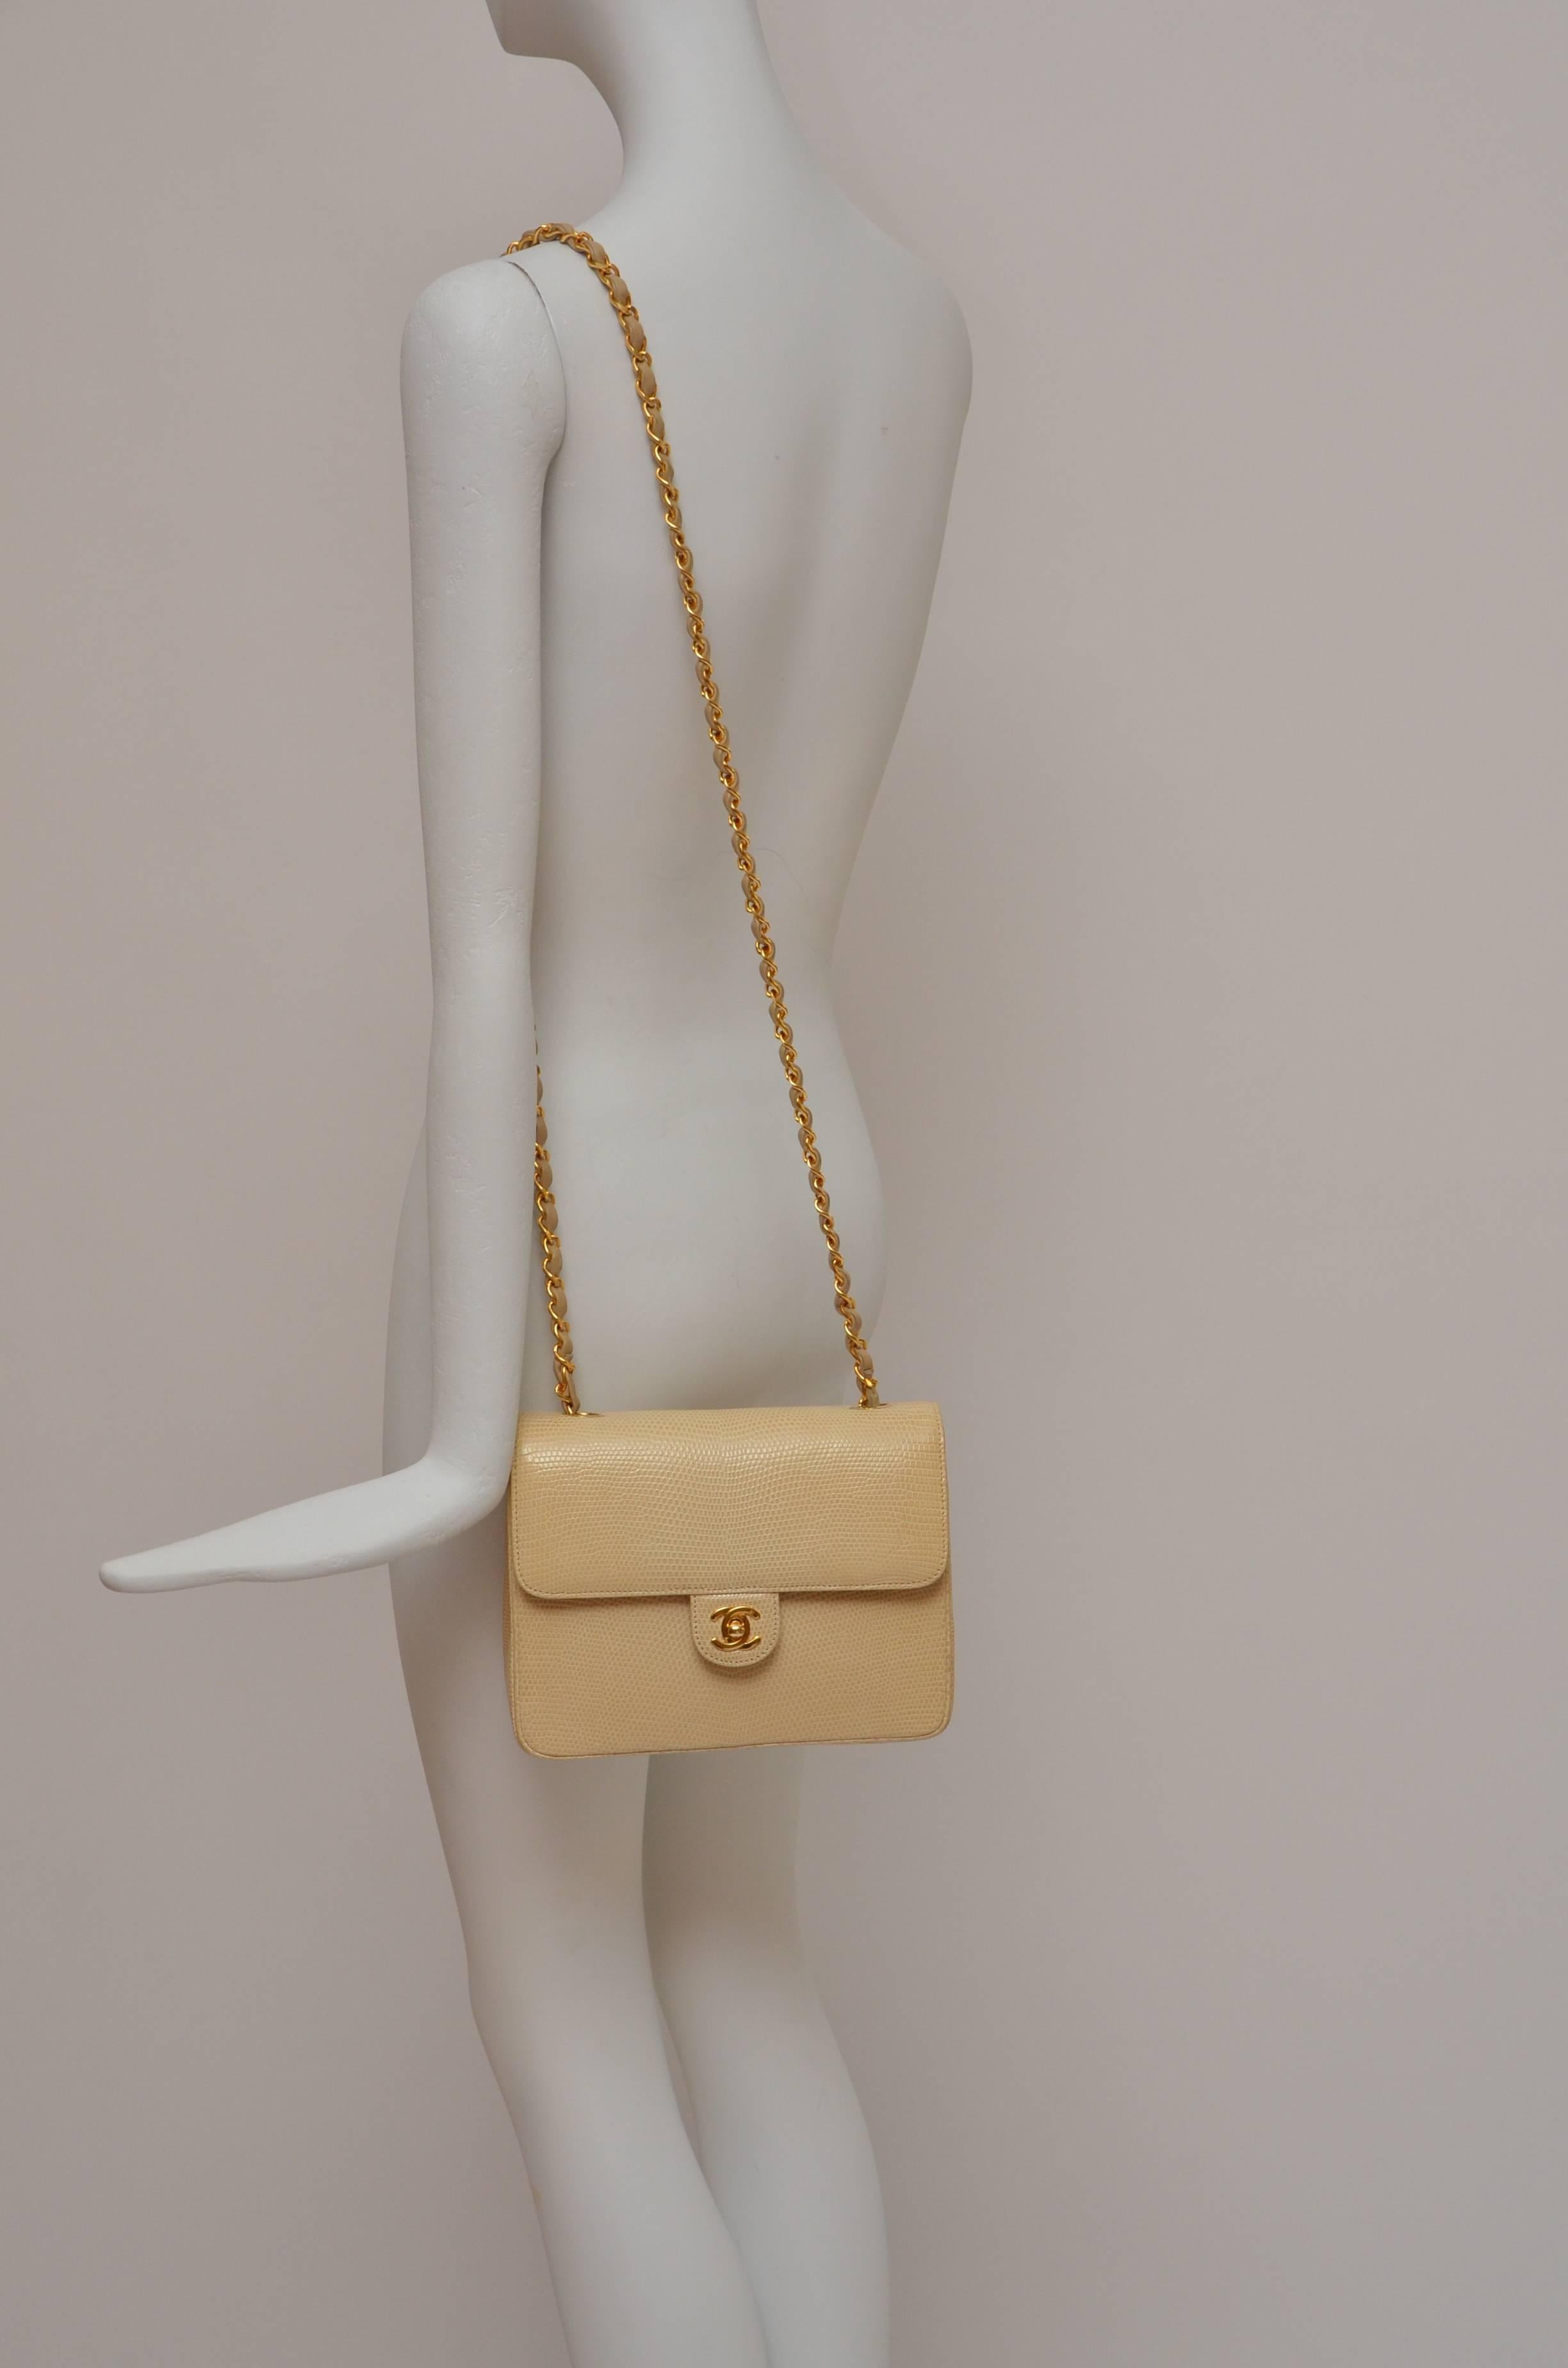 Chanel Mini Lizard Handbag, 1990s     3